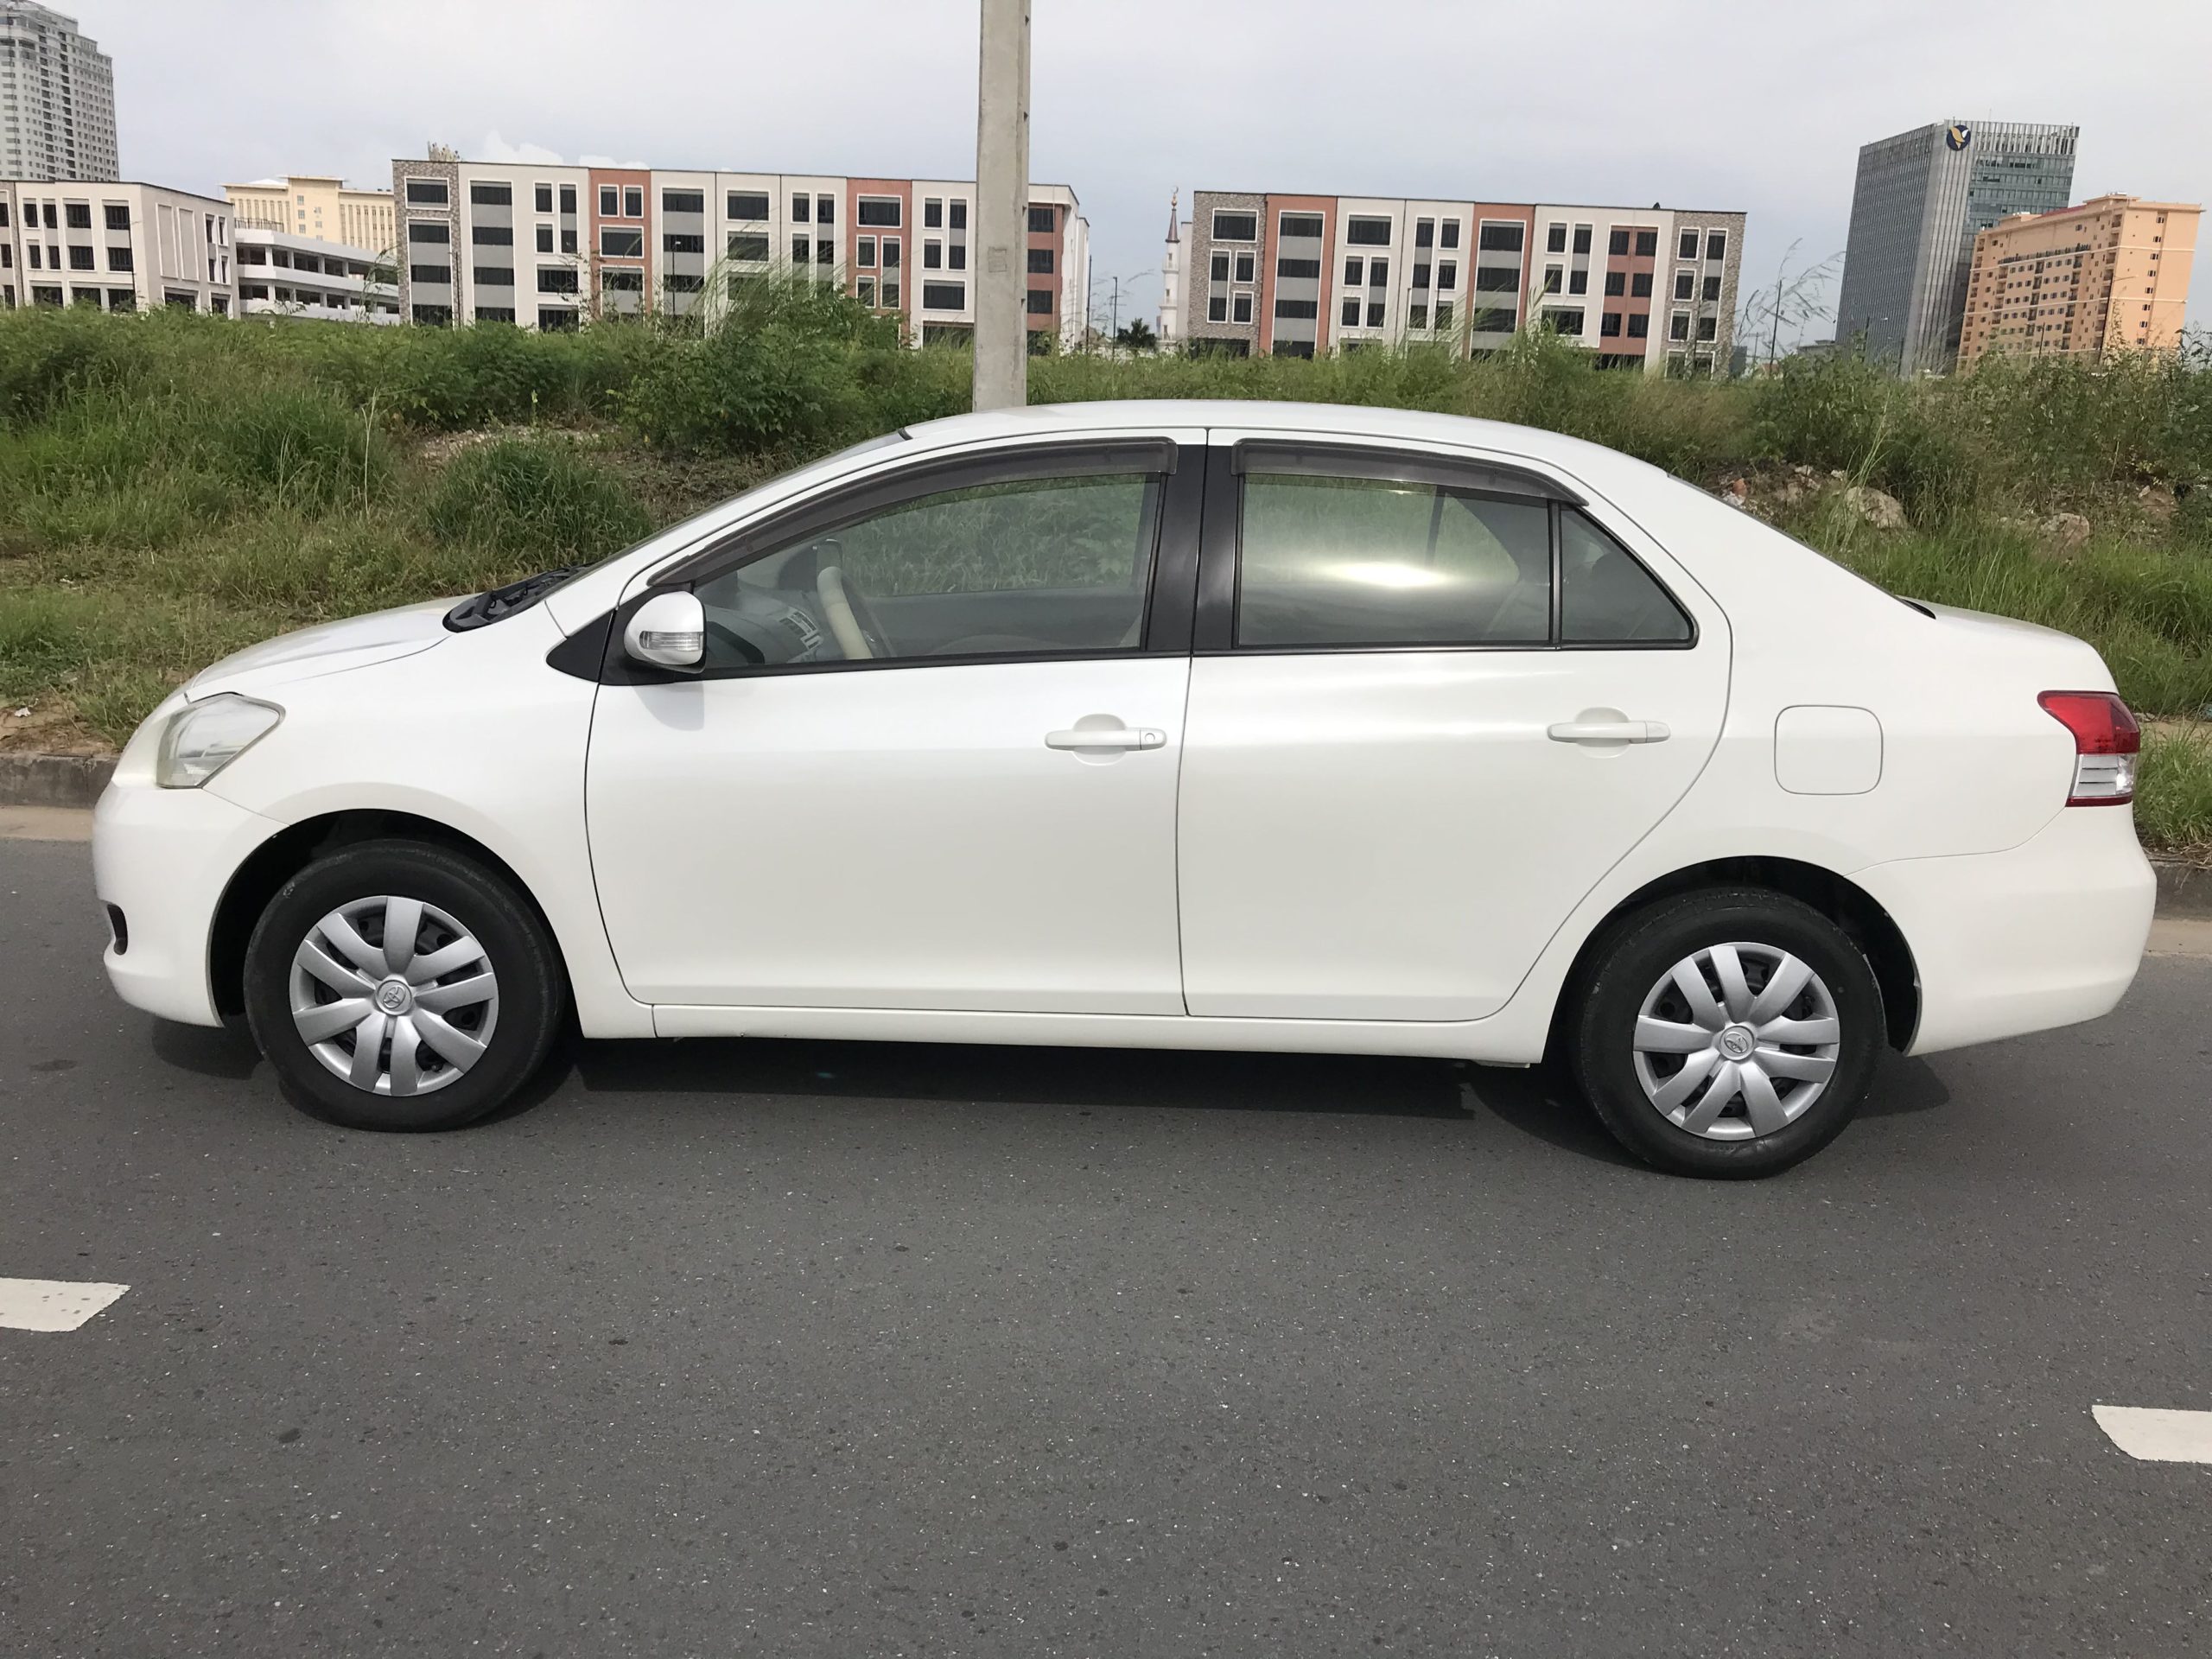 Toyota Belta White 09